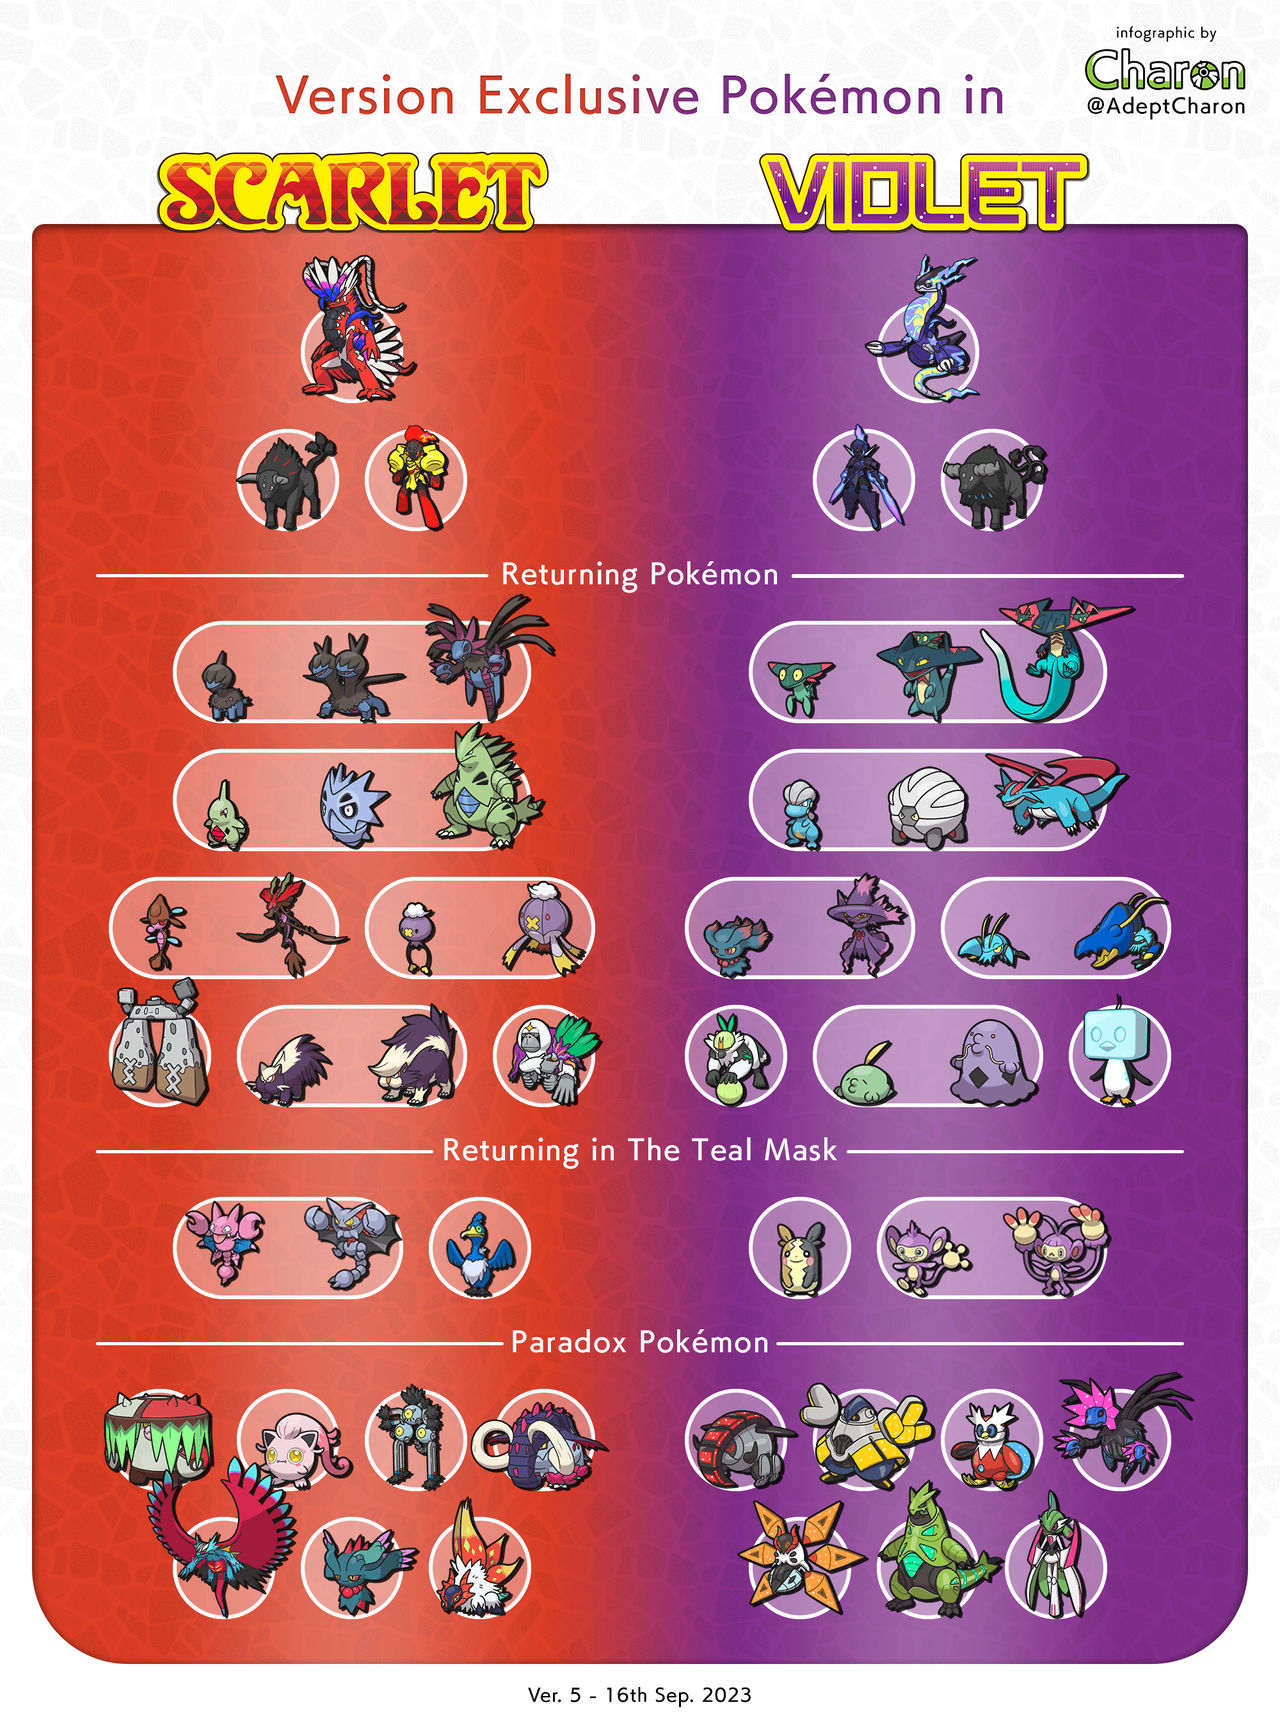 Pokémon Scarlet & Violet: All Version Exclusives